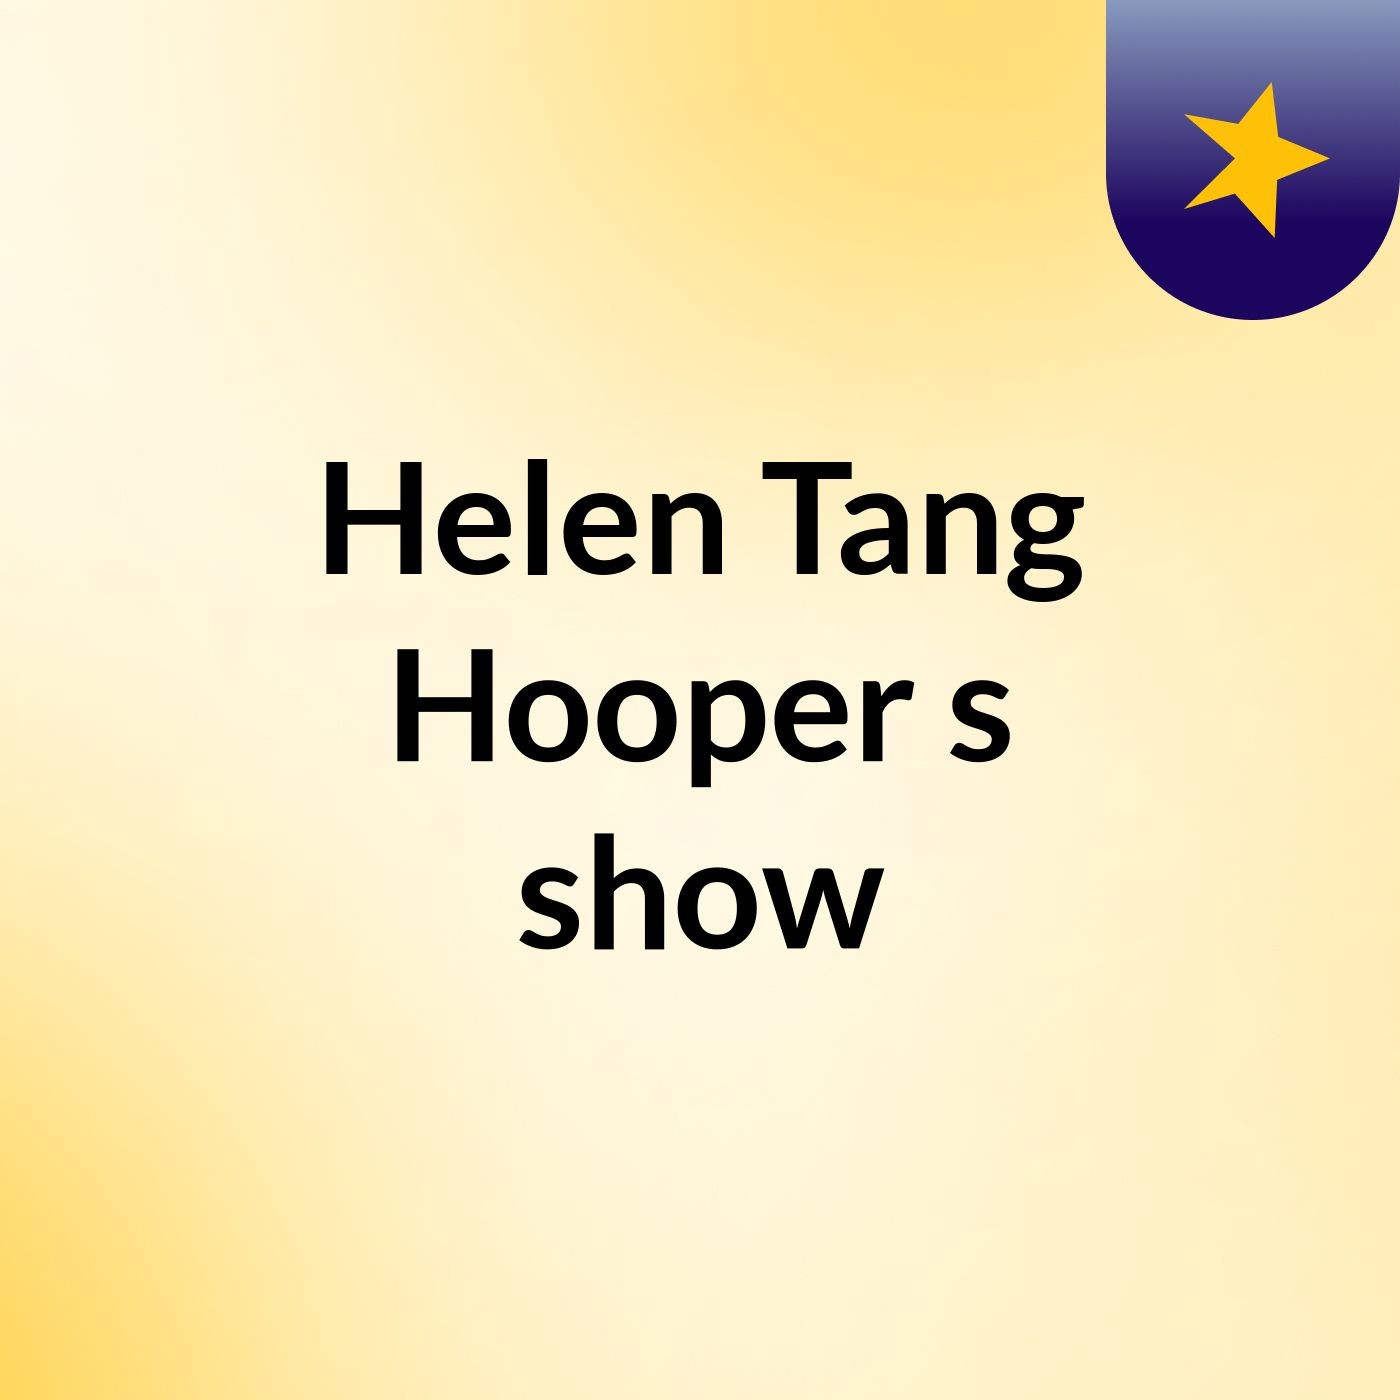 Helen Tang Hooper's show